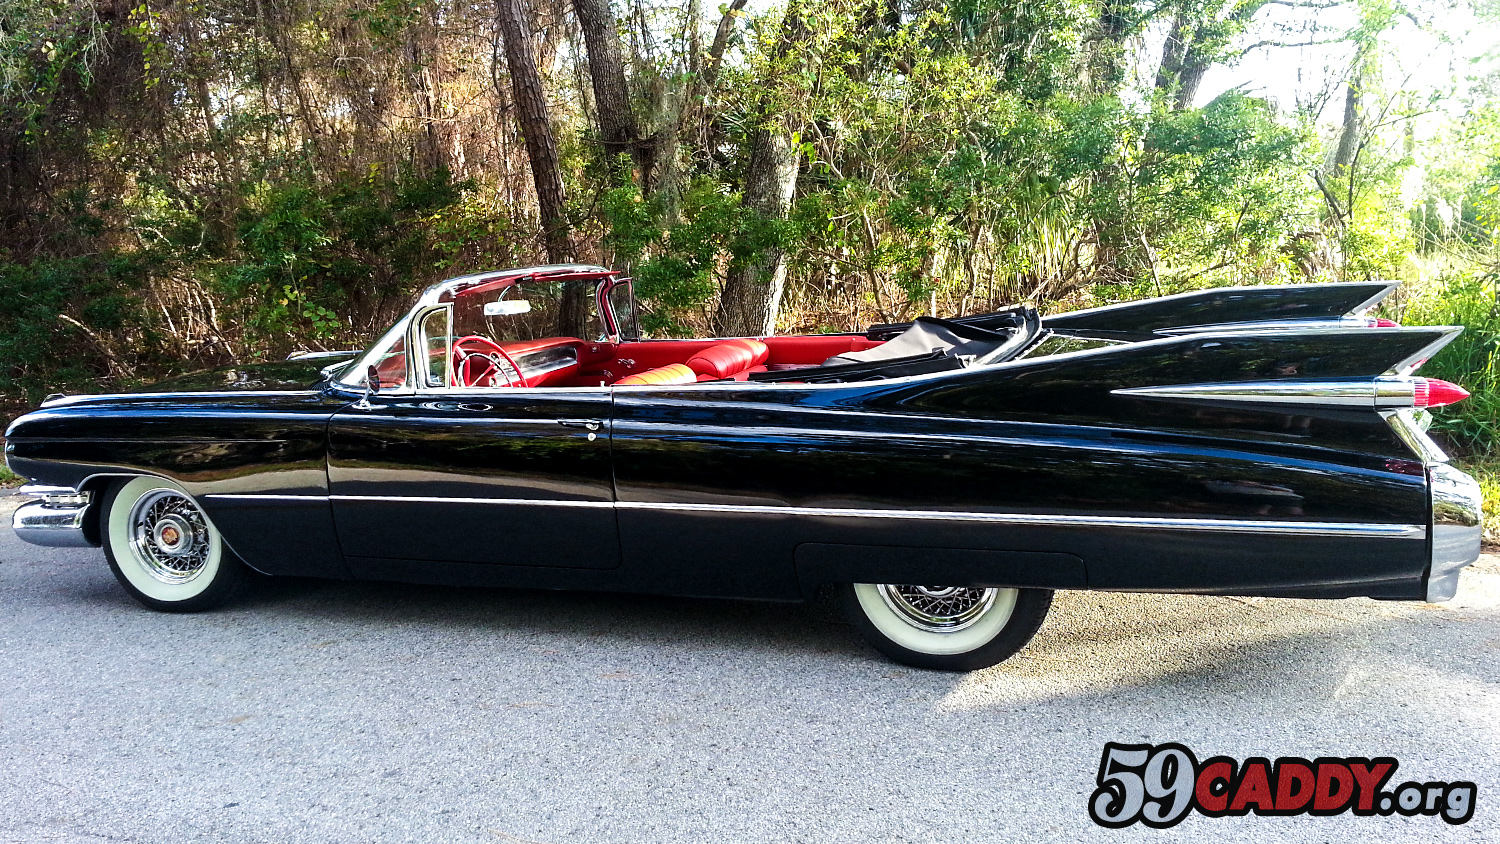 Black 1959 Cadillac Convertible For Sale Black 59 Caddy 1959 Black Cadillac Series 62 Convertible For Sale